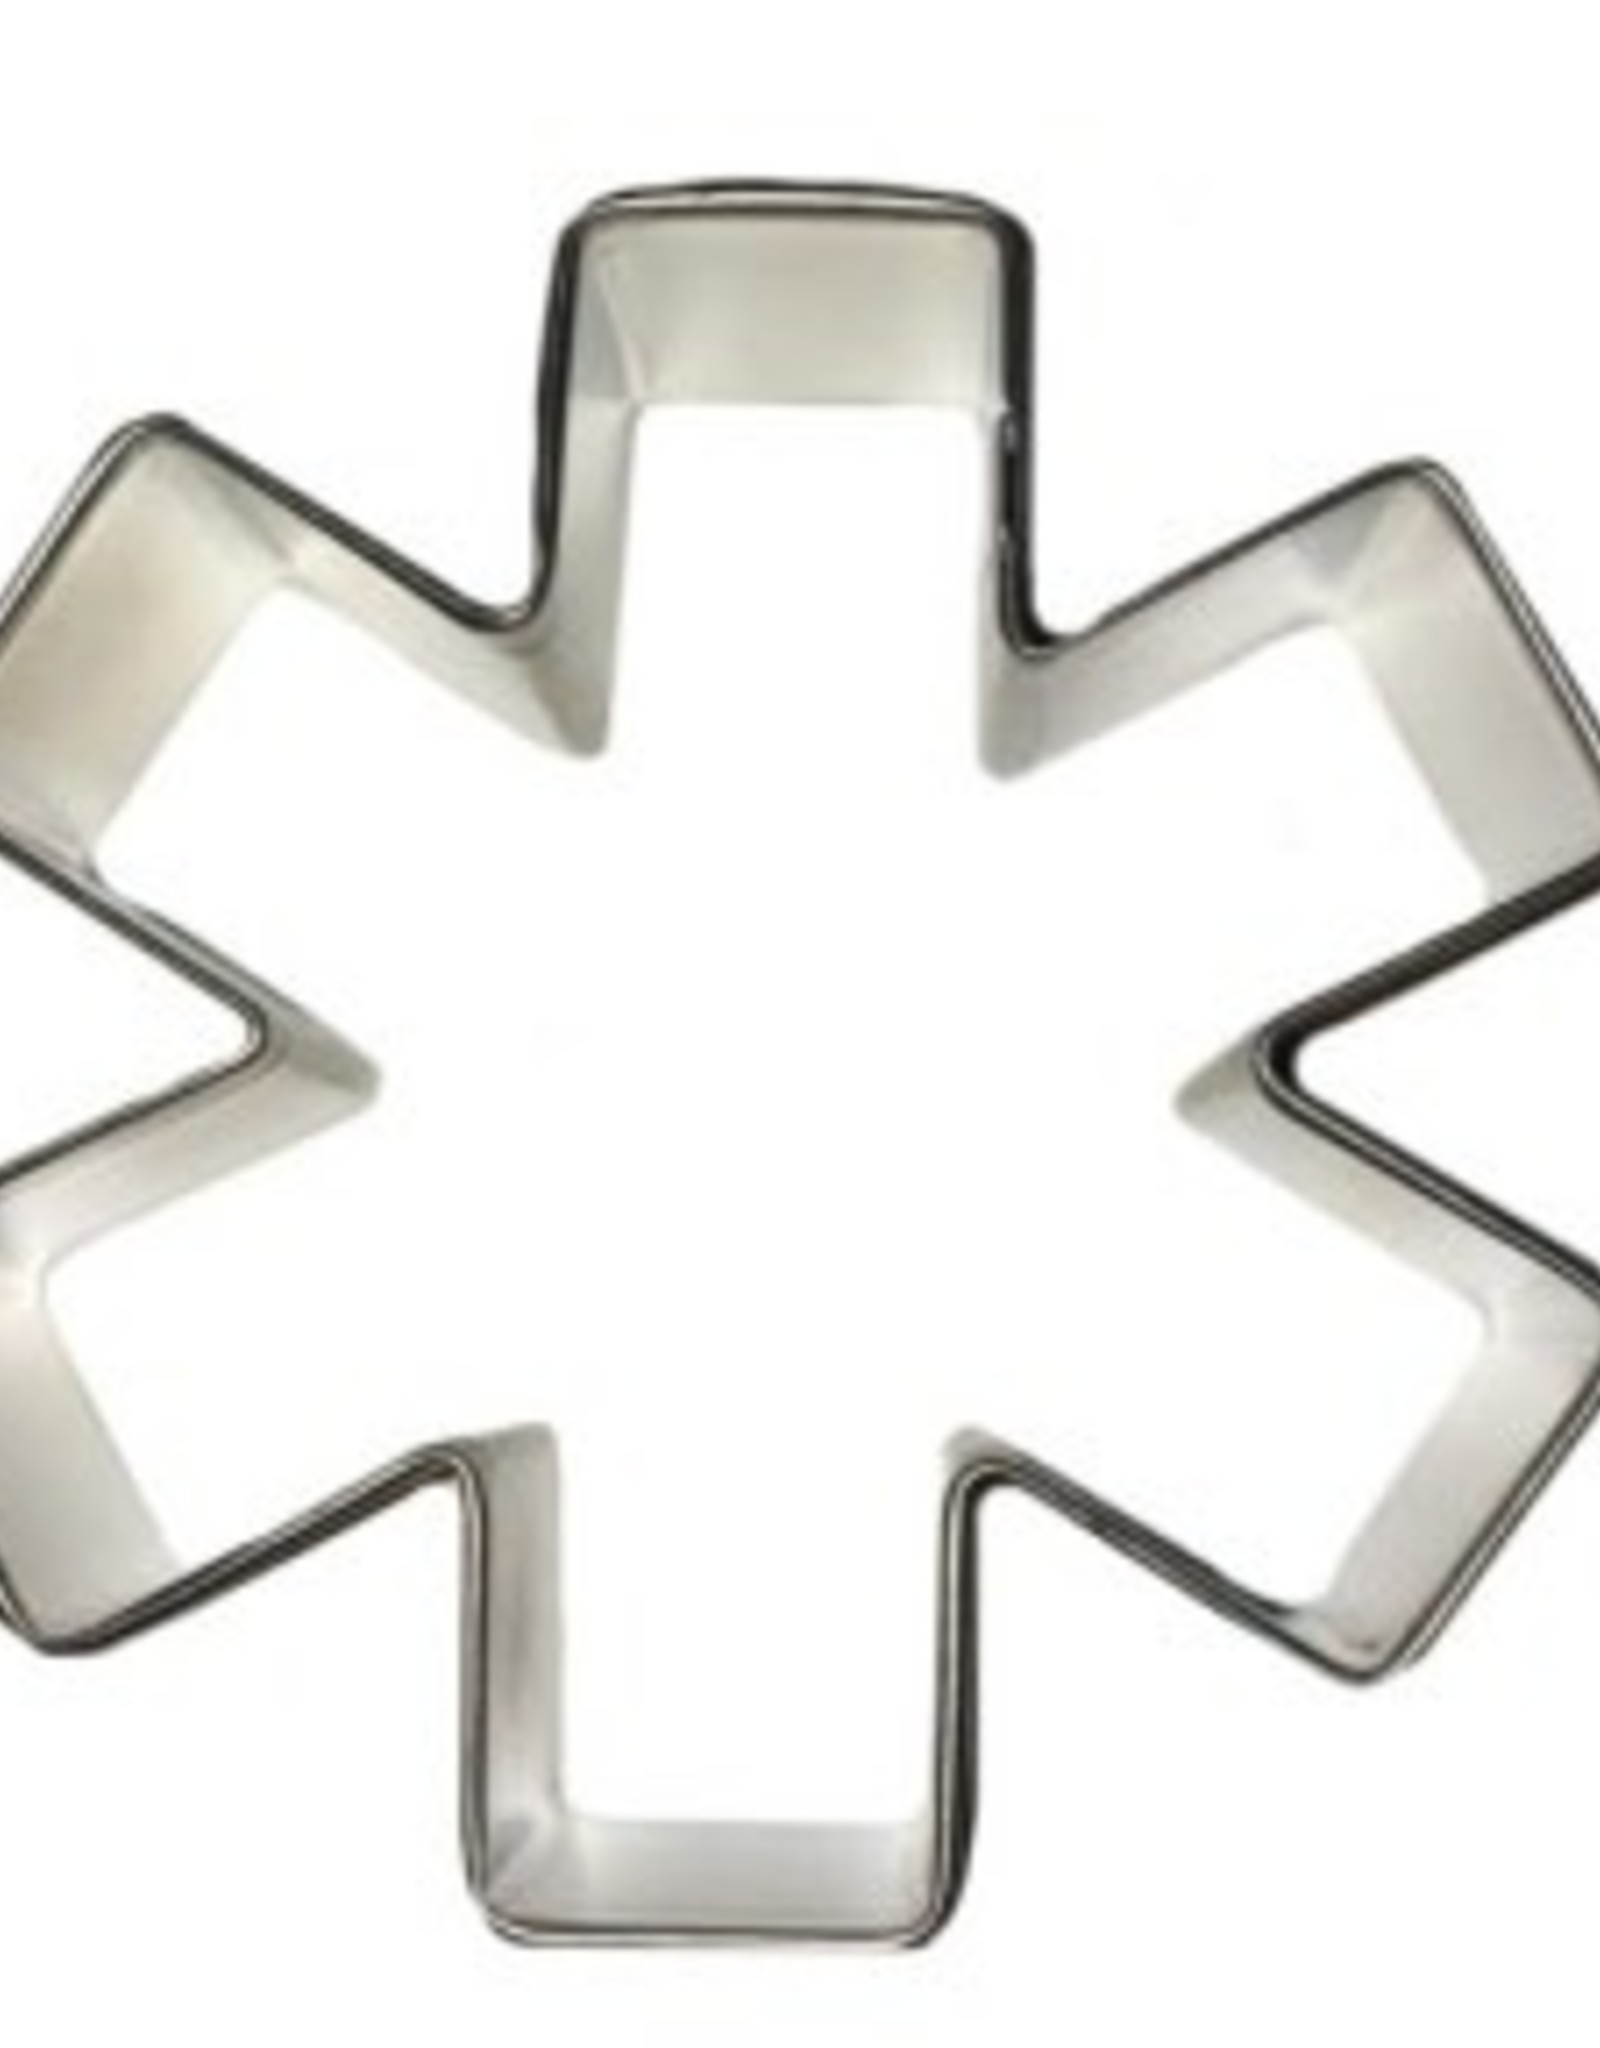 Asterisk/Medical Symbol Cookie Cutter 3"